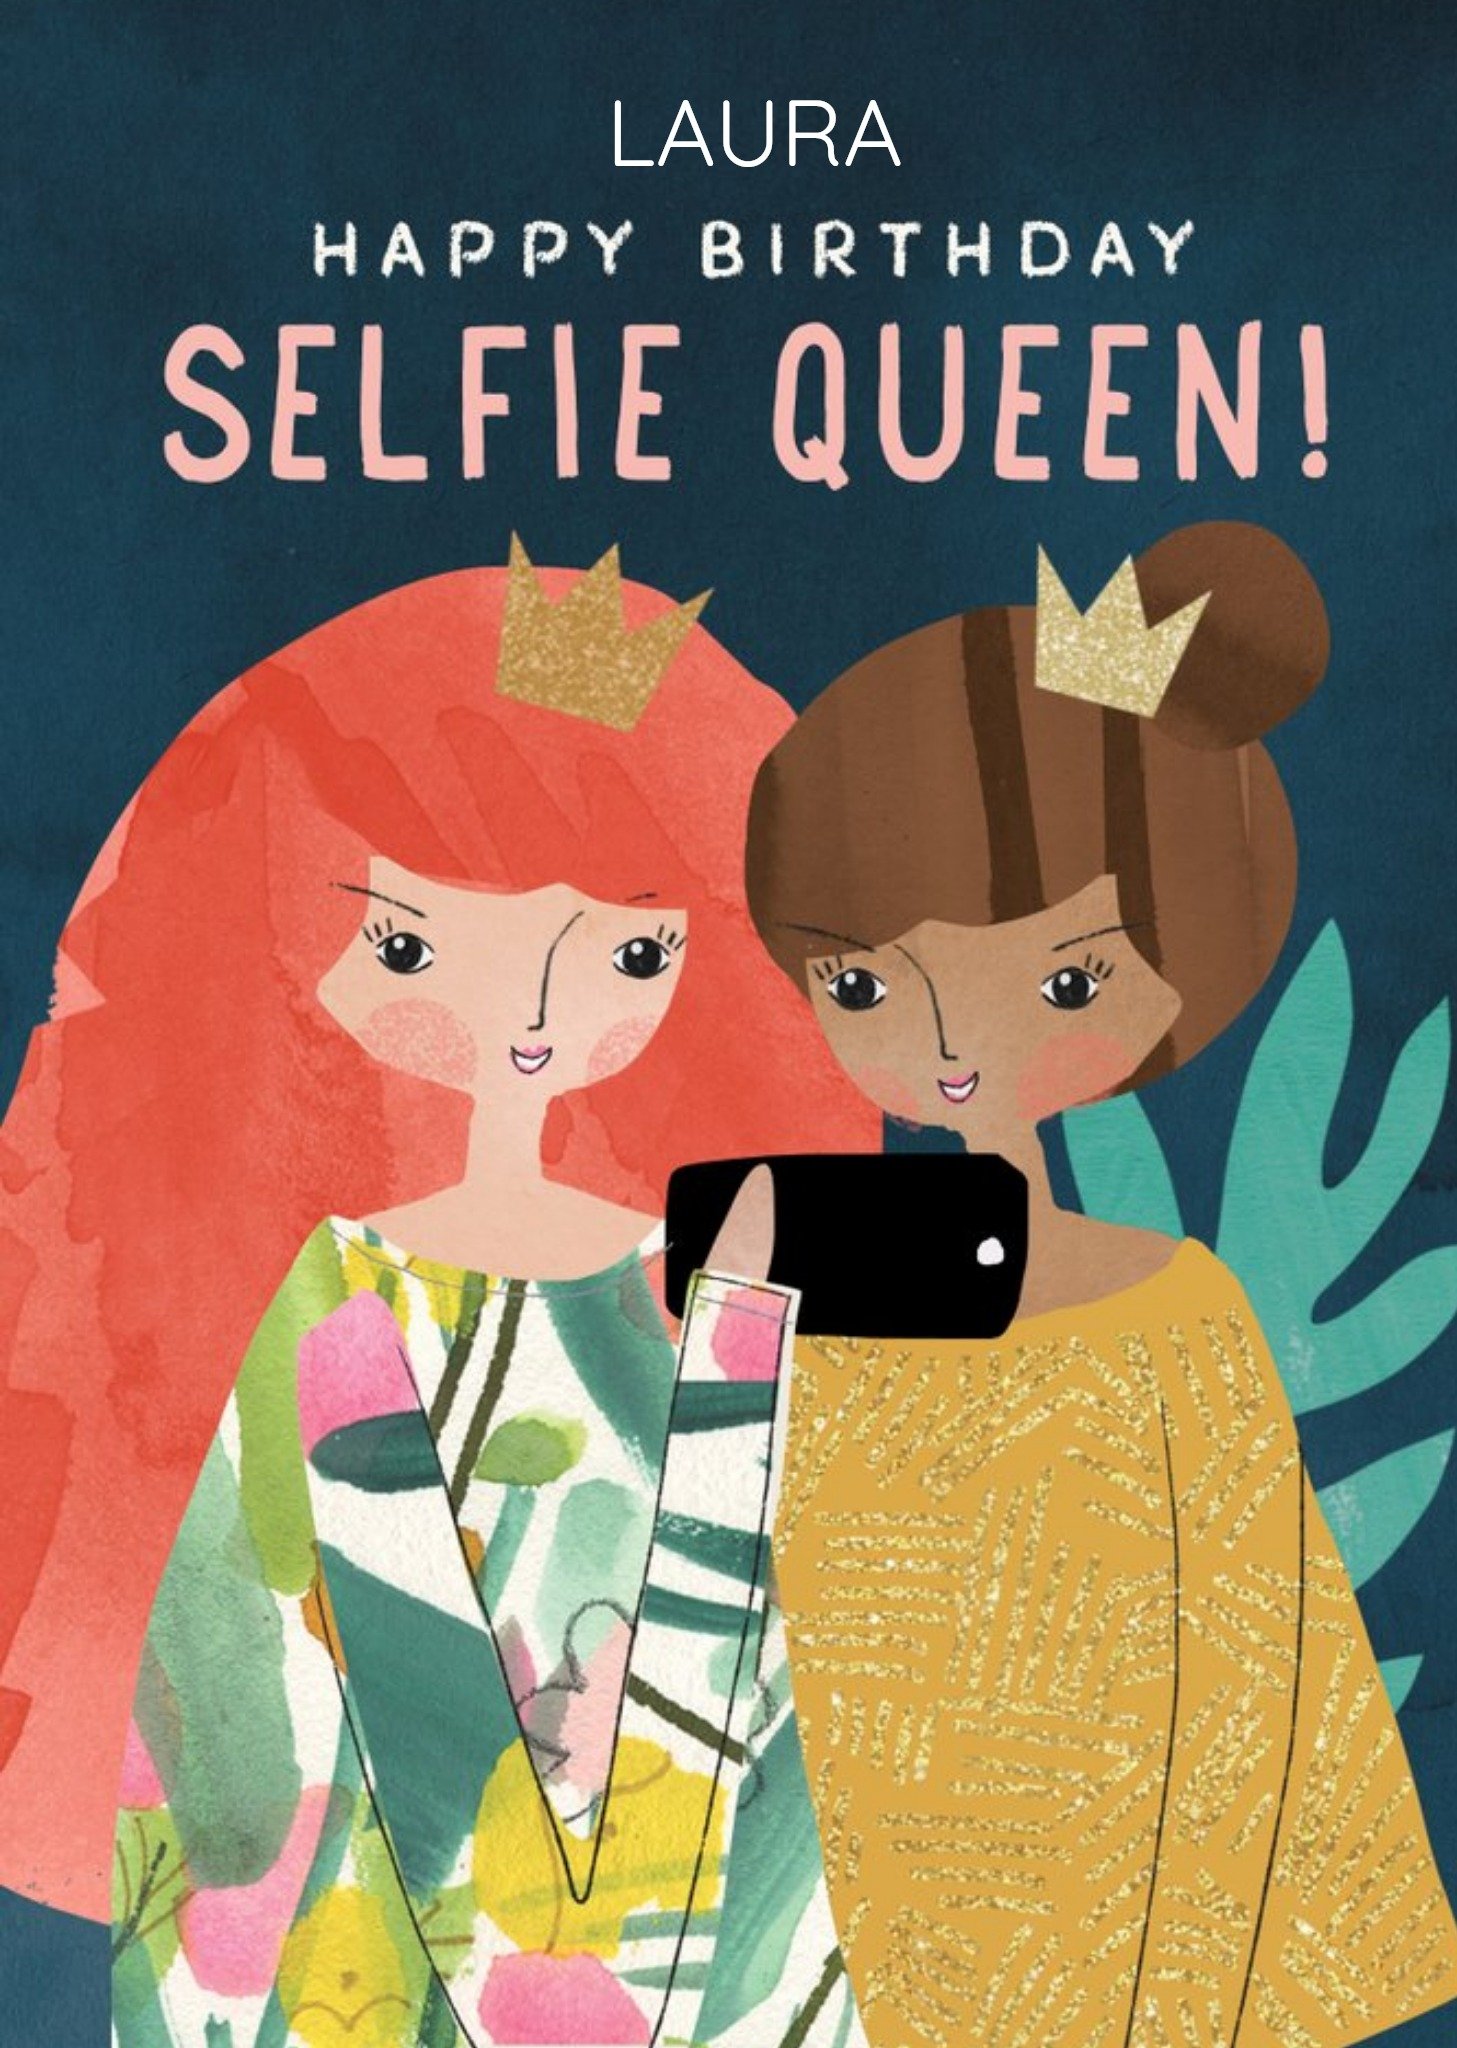 Moonpig Pigment Hey Girl Illustrated Happy Birthday Selfie Queen Card, Large